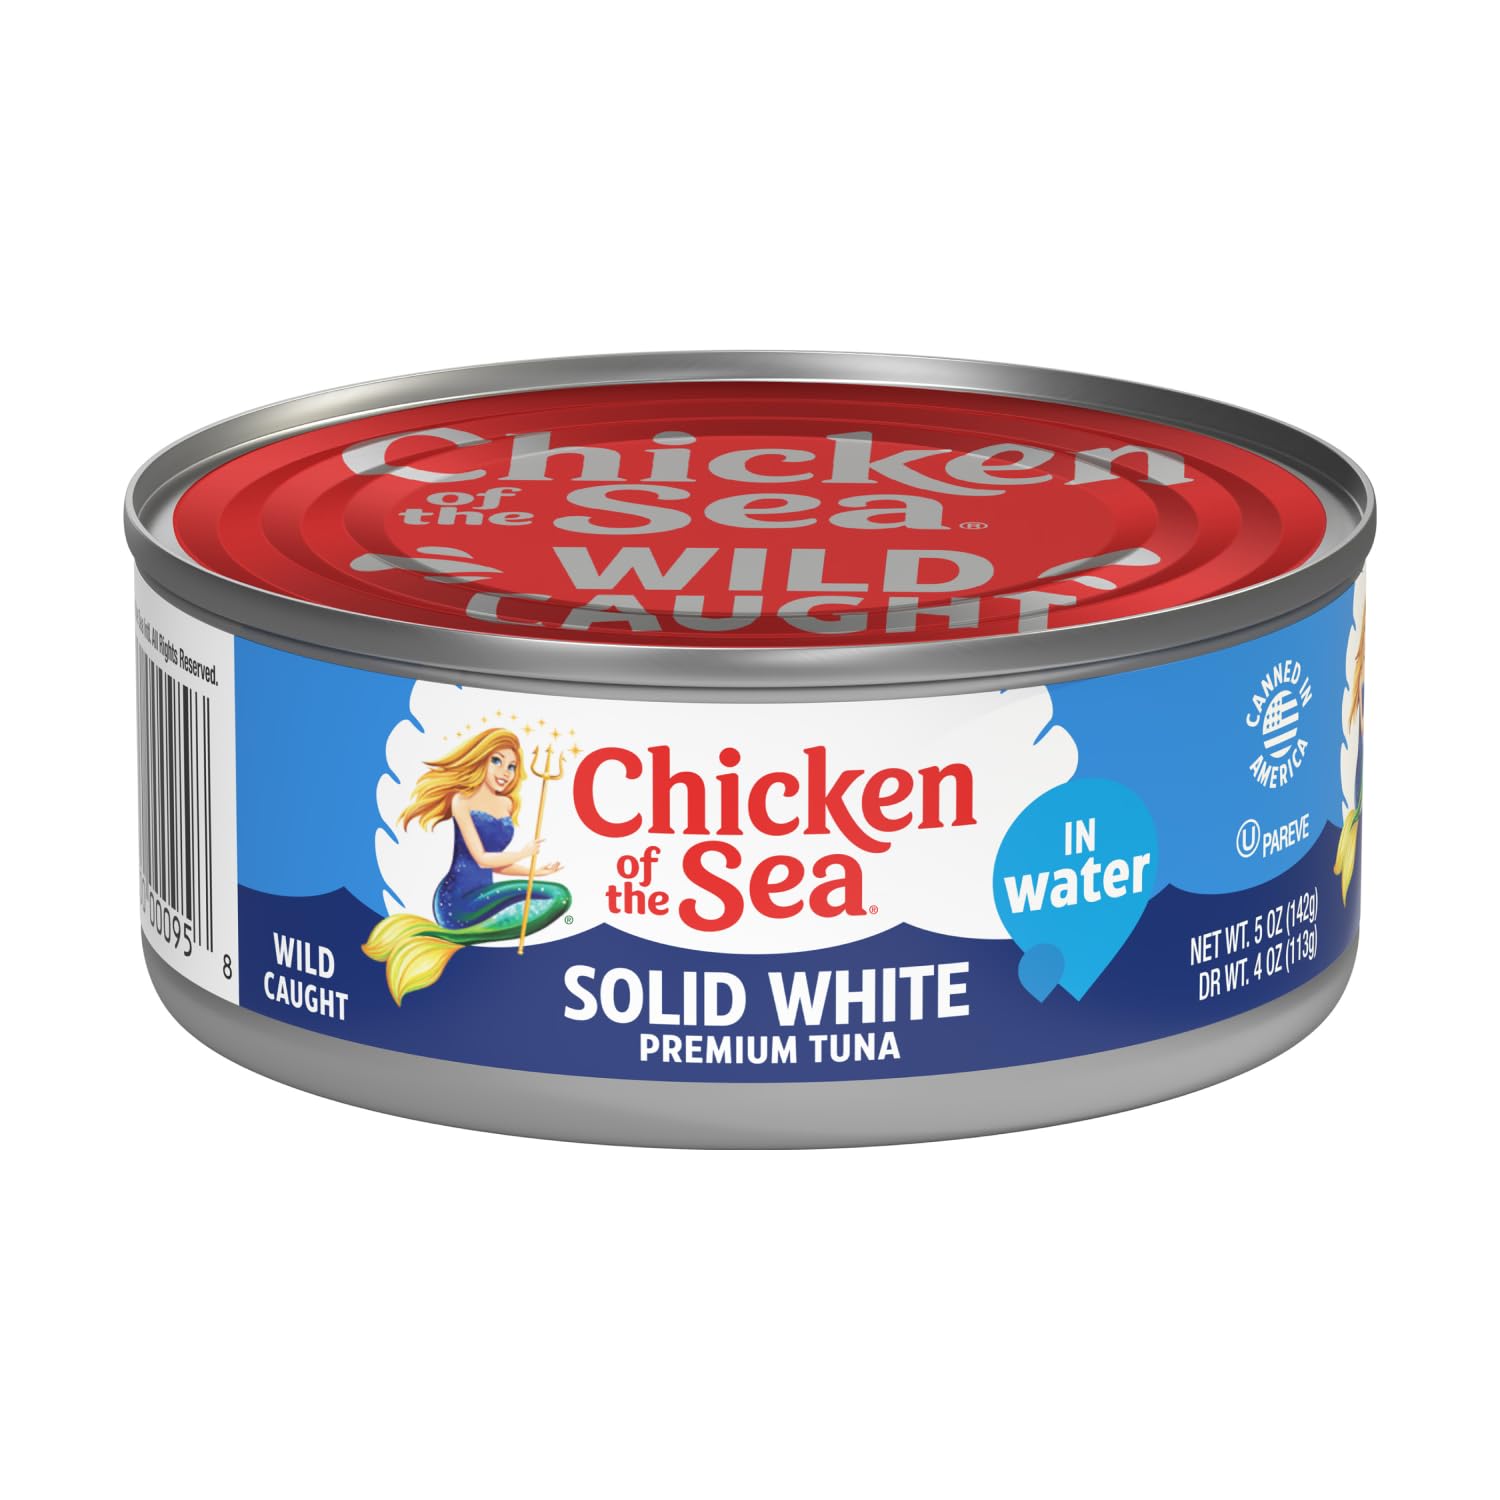 Chicken of the Sea Solid White Premium Albacore Tuna in Water, Wild Caught Tuna, 5 oz. Can (Pack of 1)